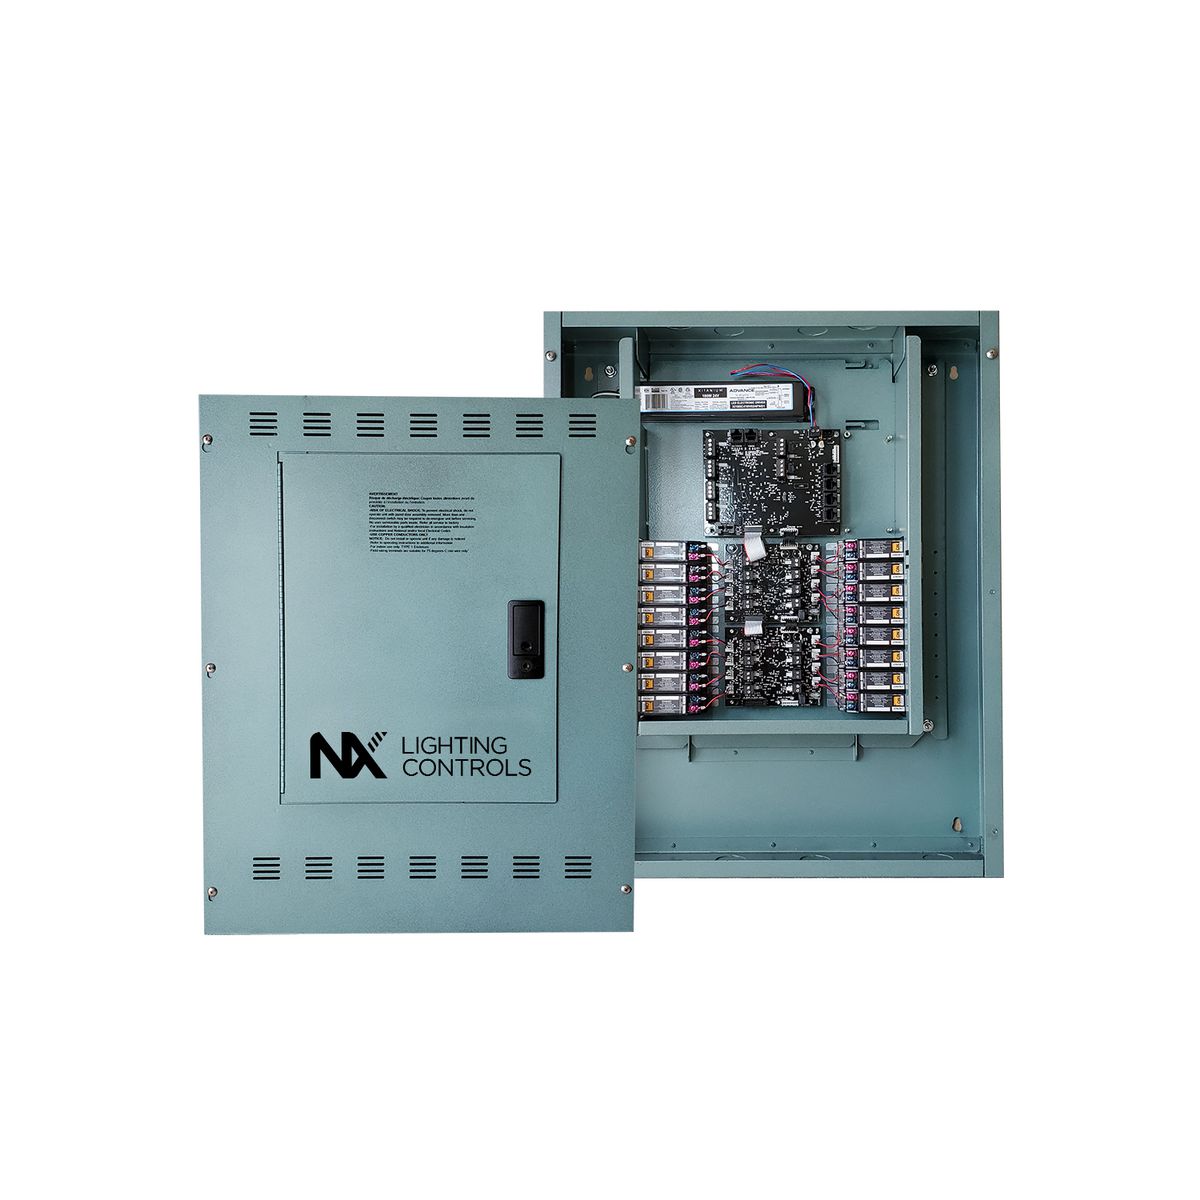 NXP2, PNL RELAY/DIMMER BOARD